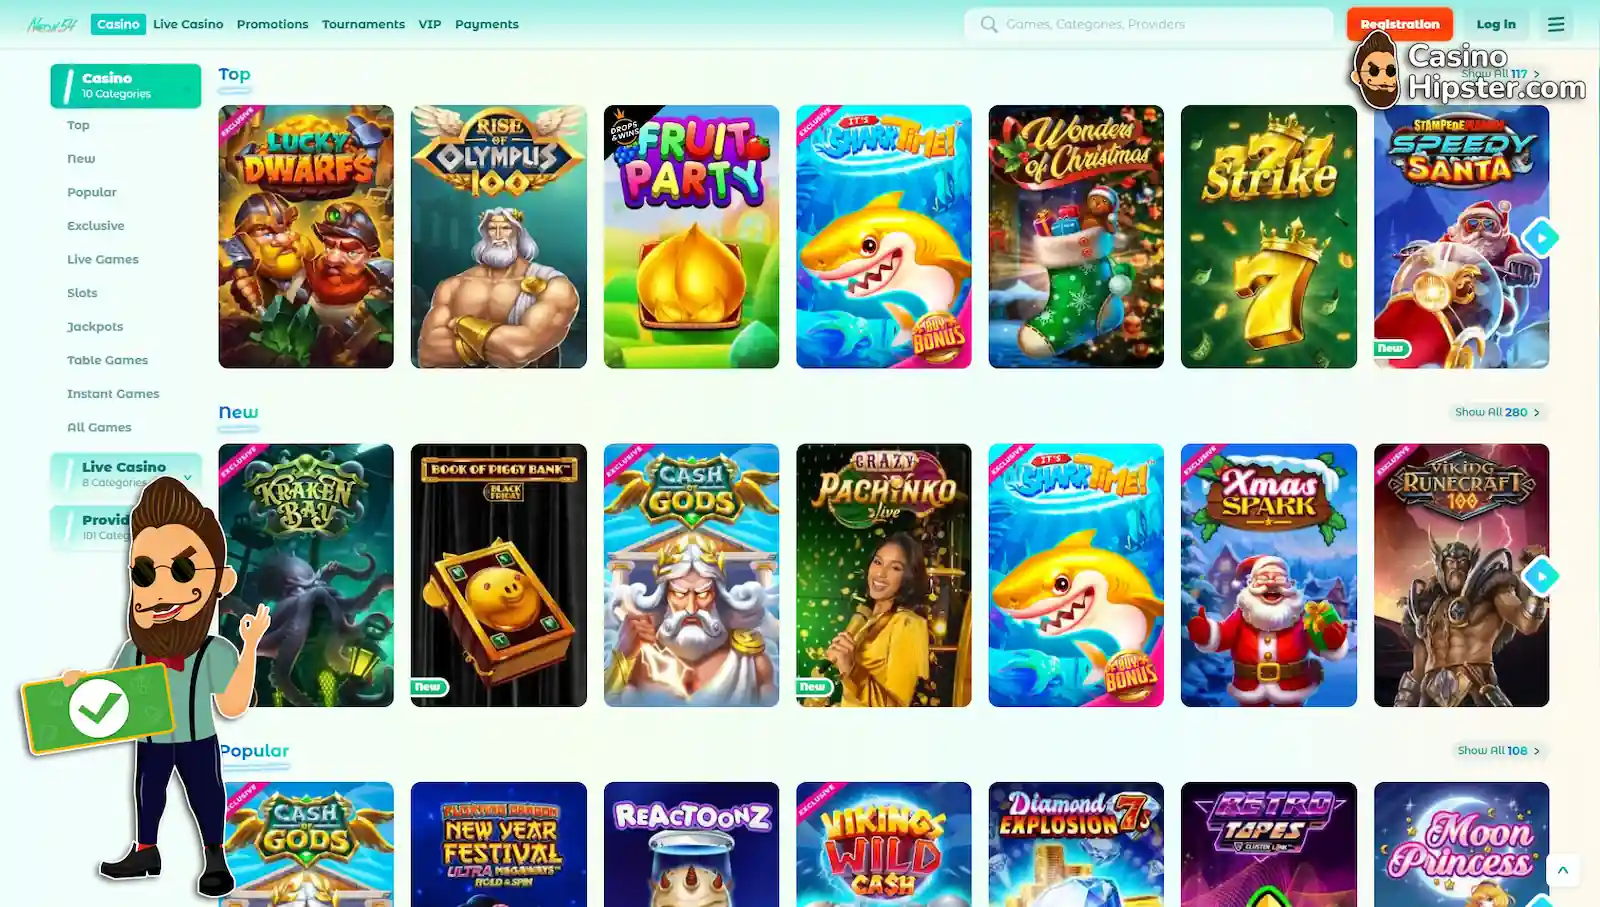 Neon54 Casino Games